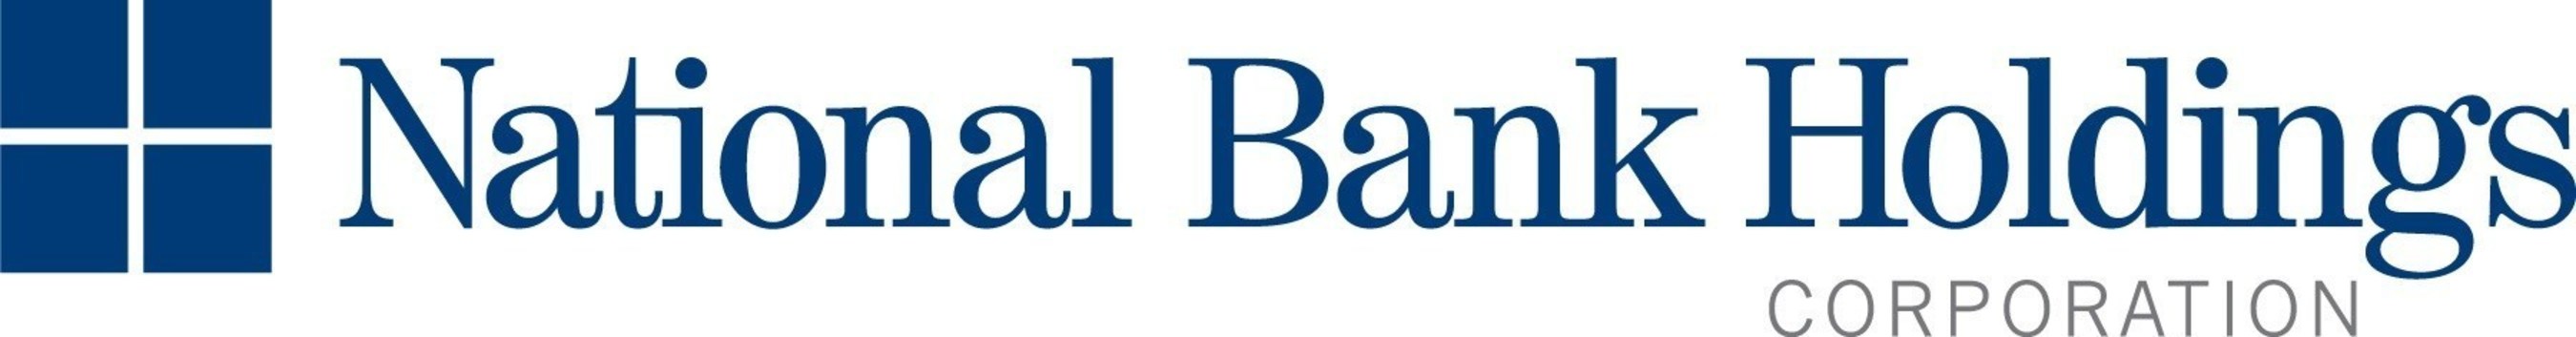 National Bank Holdings Corporation Logo.